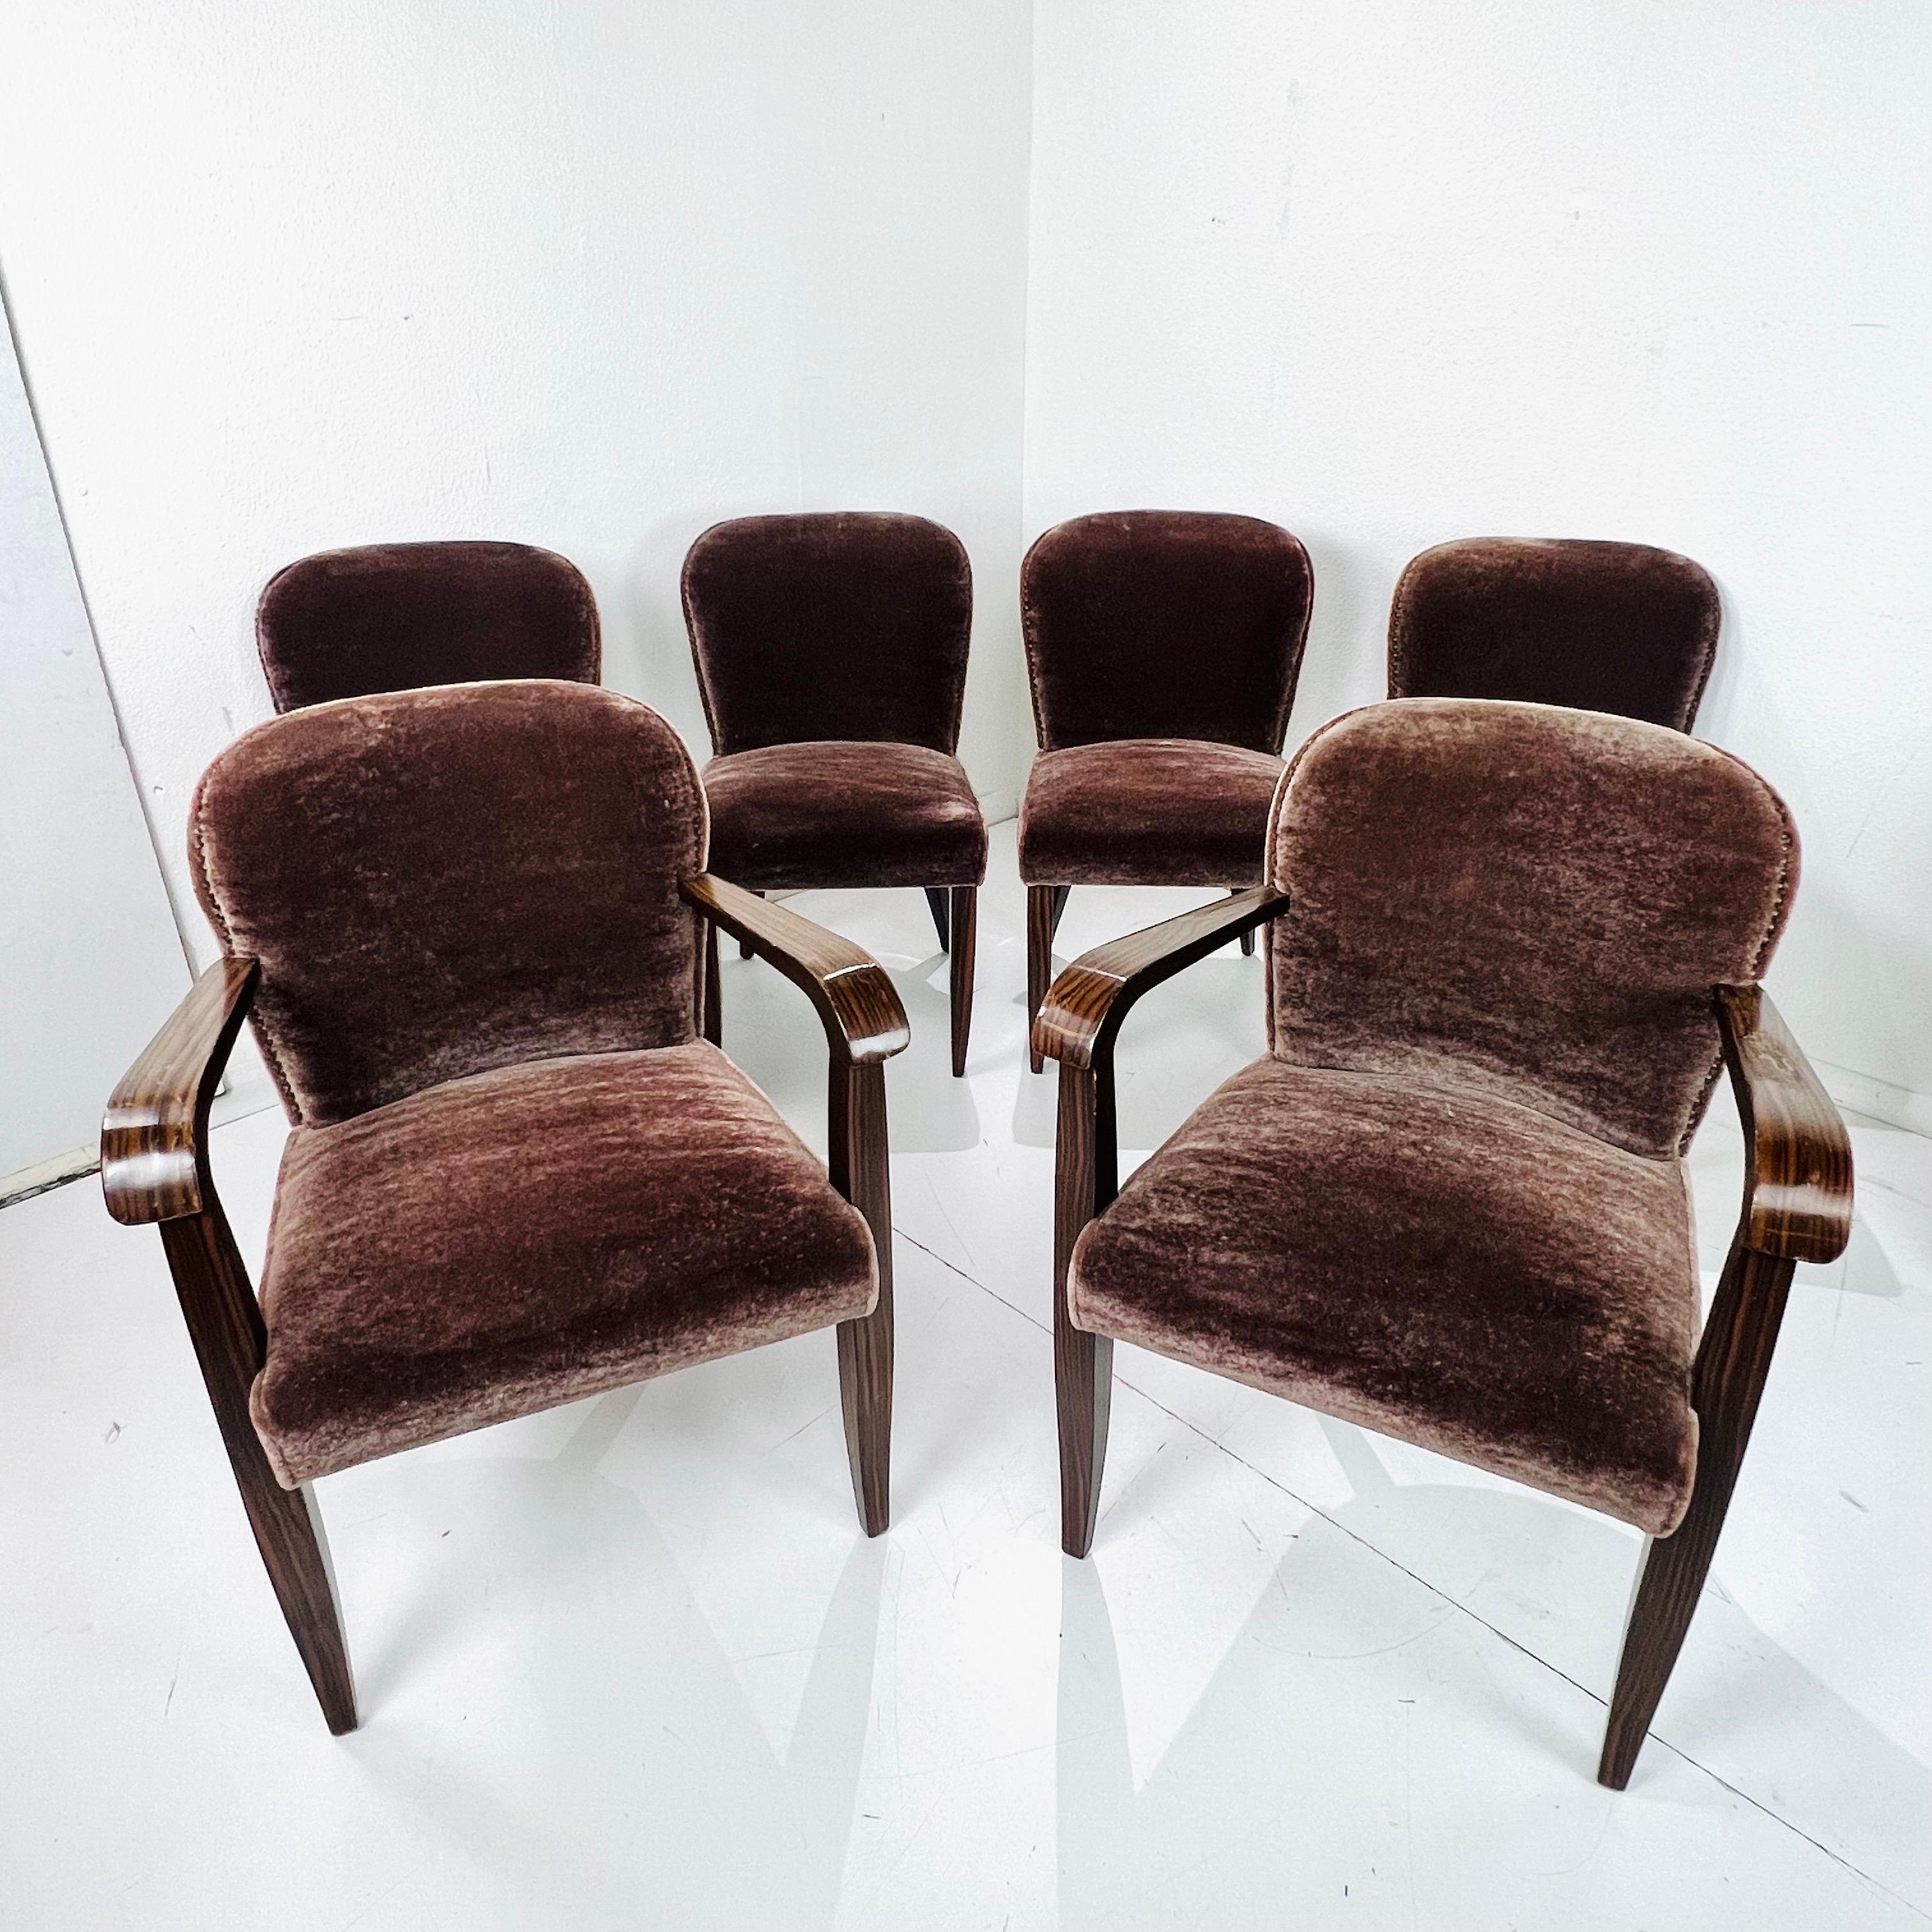 Mid-20th Century Set of 6 Macassar Art Deco Dining Chairs